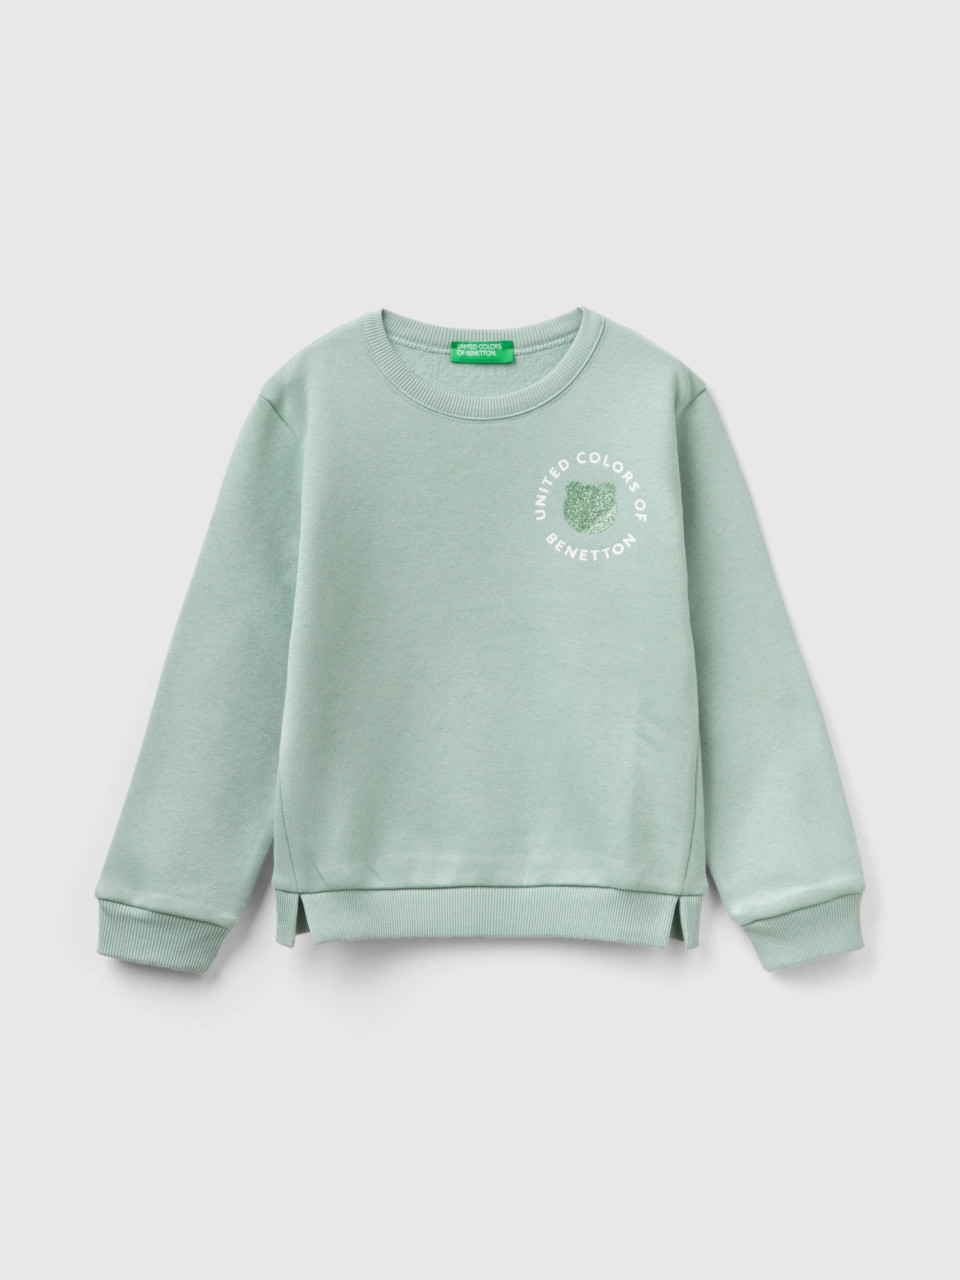 Benetton, Pullover Sweatshirt With Glittery Print, Aqua, Kids